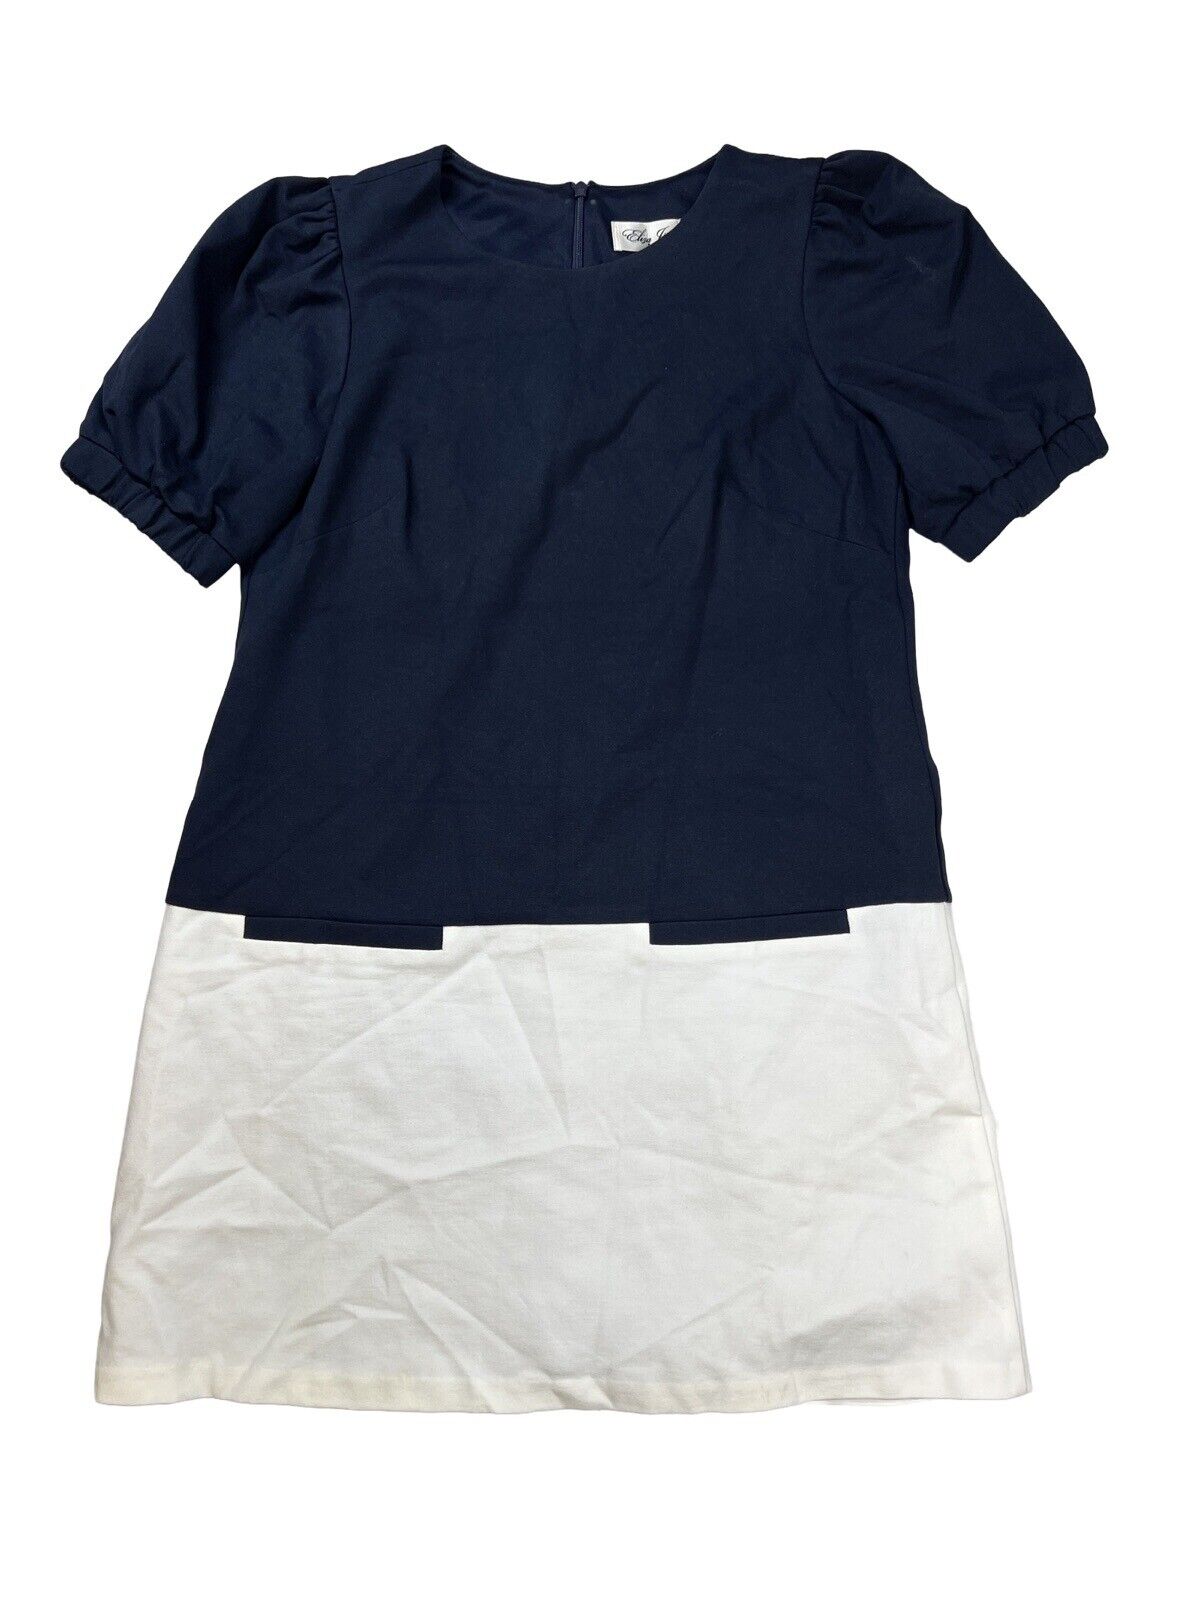 Eliza J Women's Navy Blue Stretch Shift Dress - Petite 12P